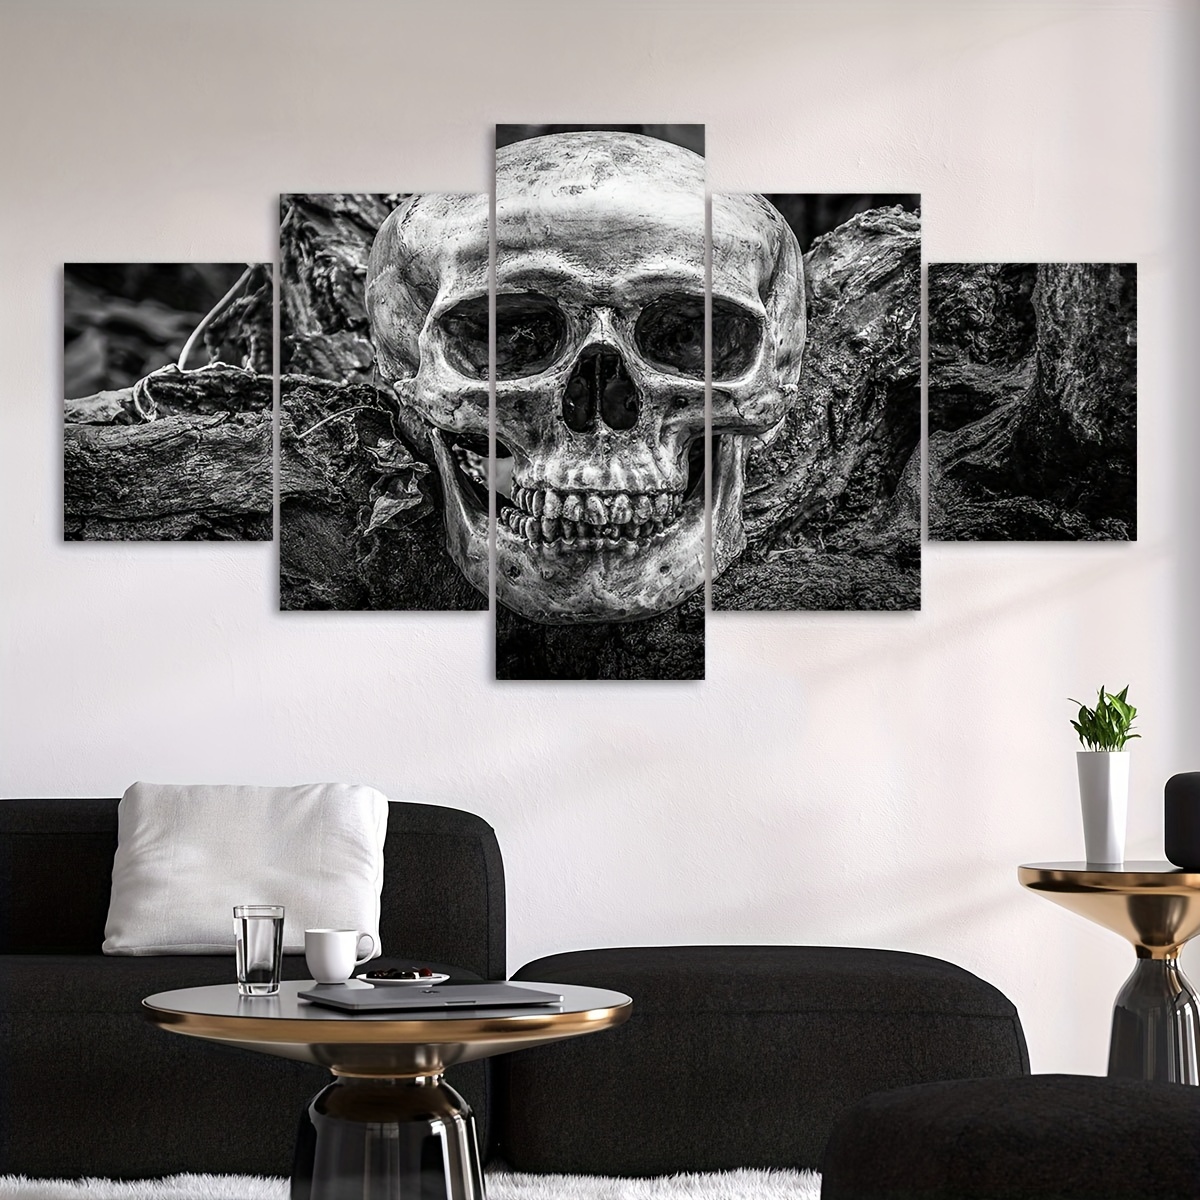 Elder Emo Skull Wall Art Home Decor Gifts Funky Passive - Temu